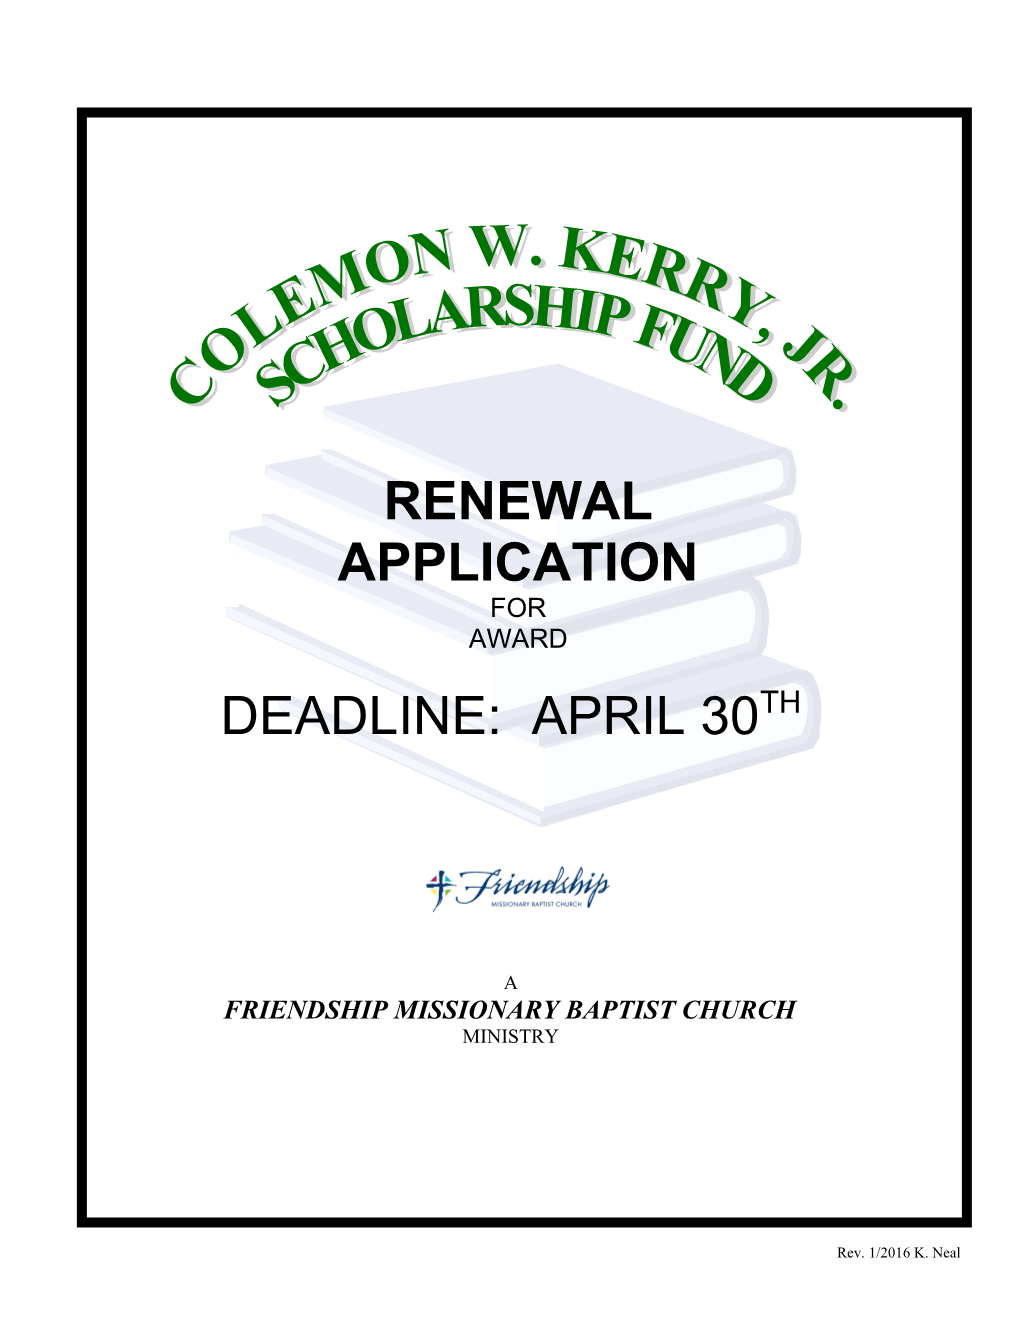 Renewal Application for Scholarship